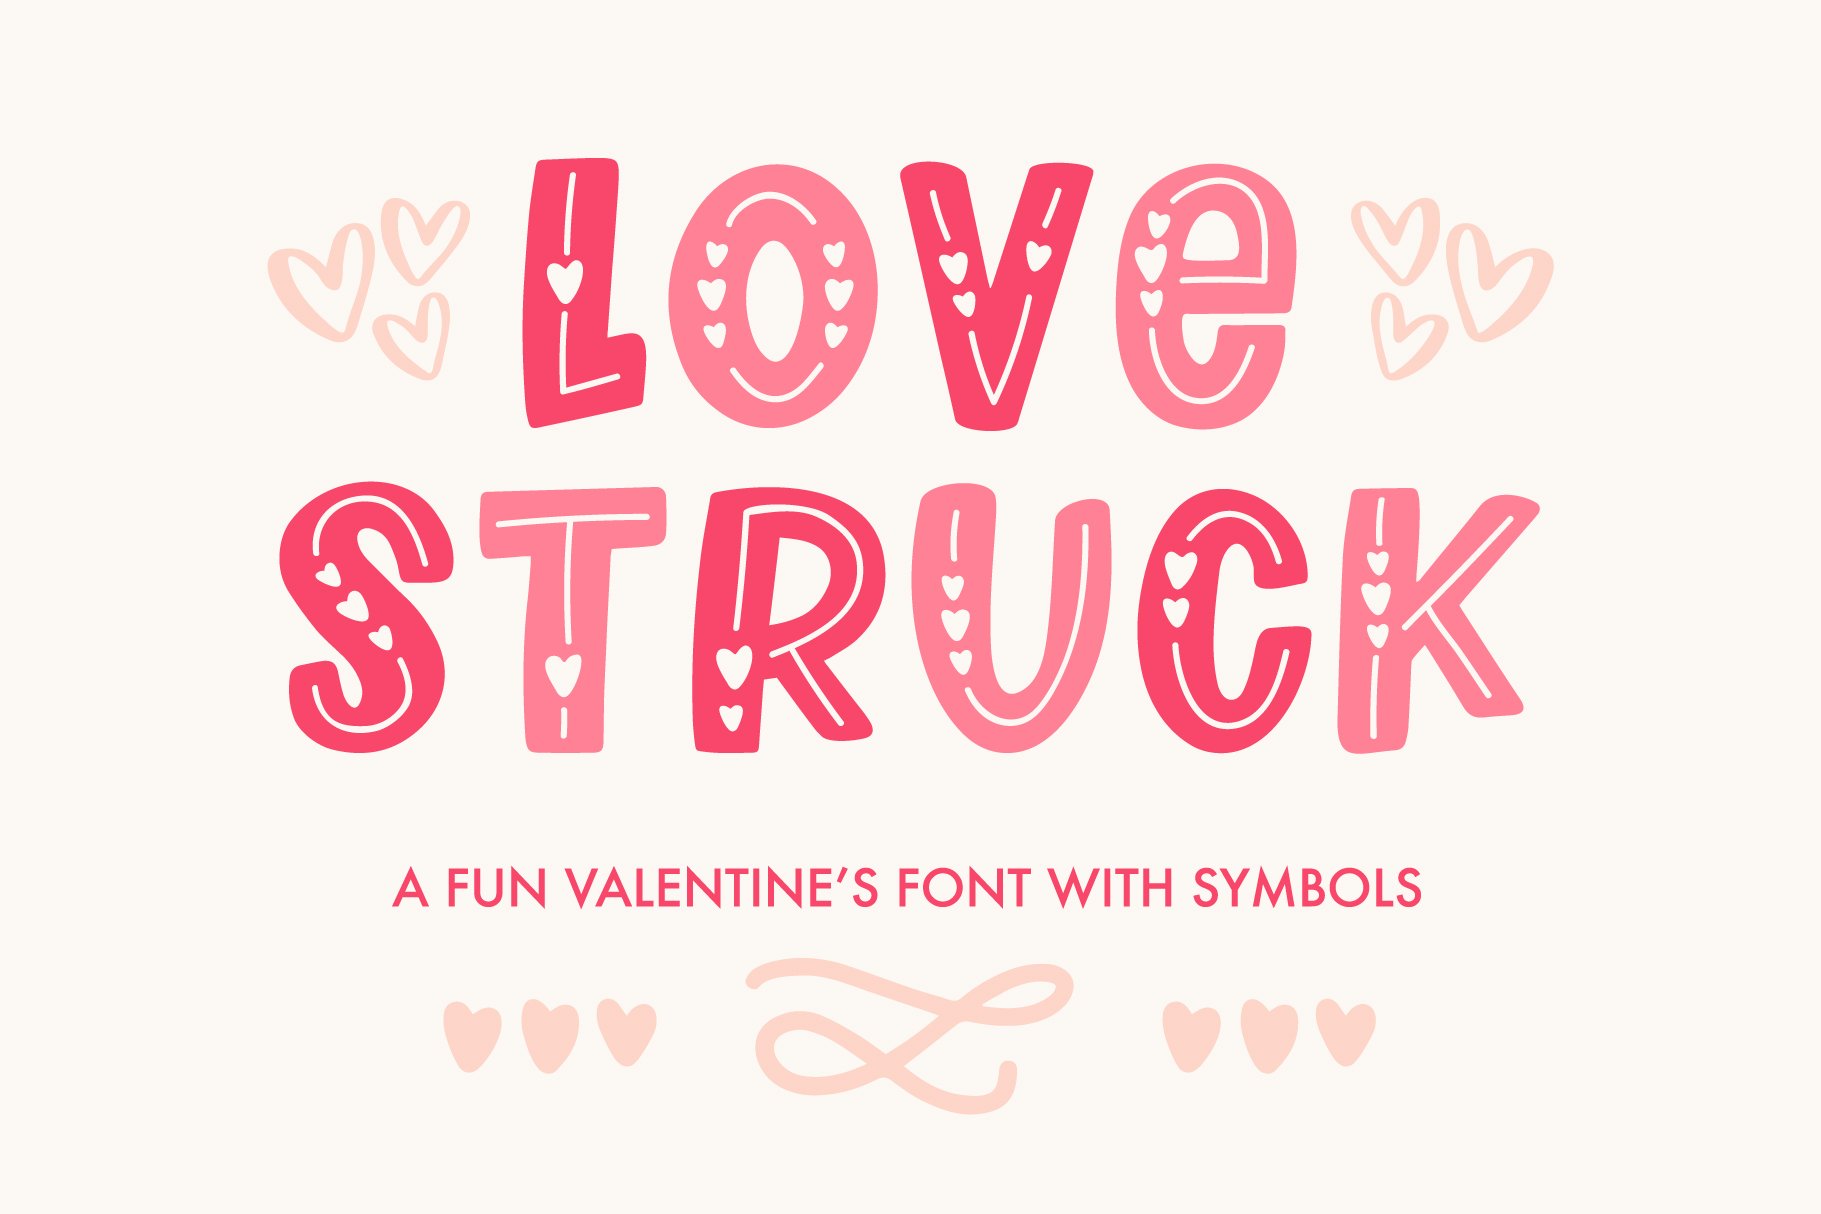 Love Struck, Valentine's Font cover image.